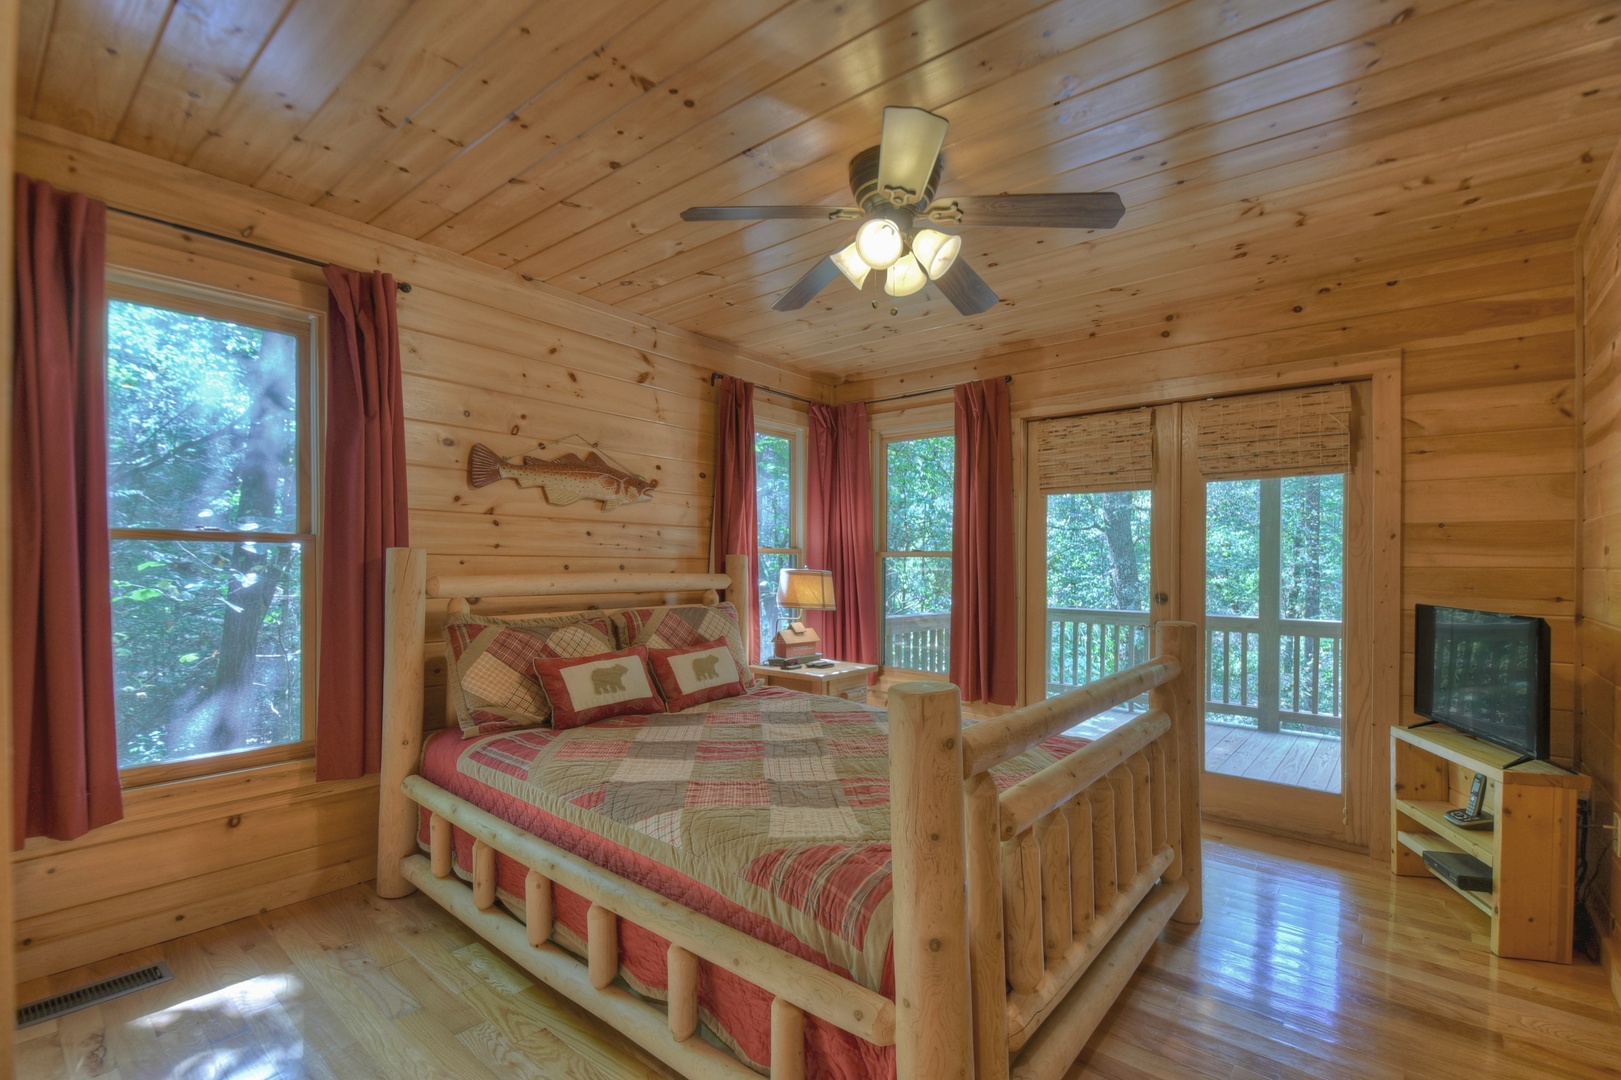 Stoney Creek Retreat - Entry Level Queen Bedroom